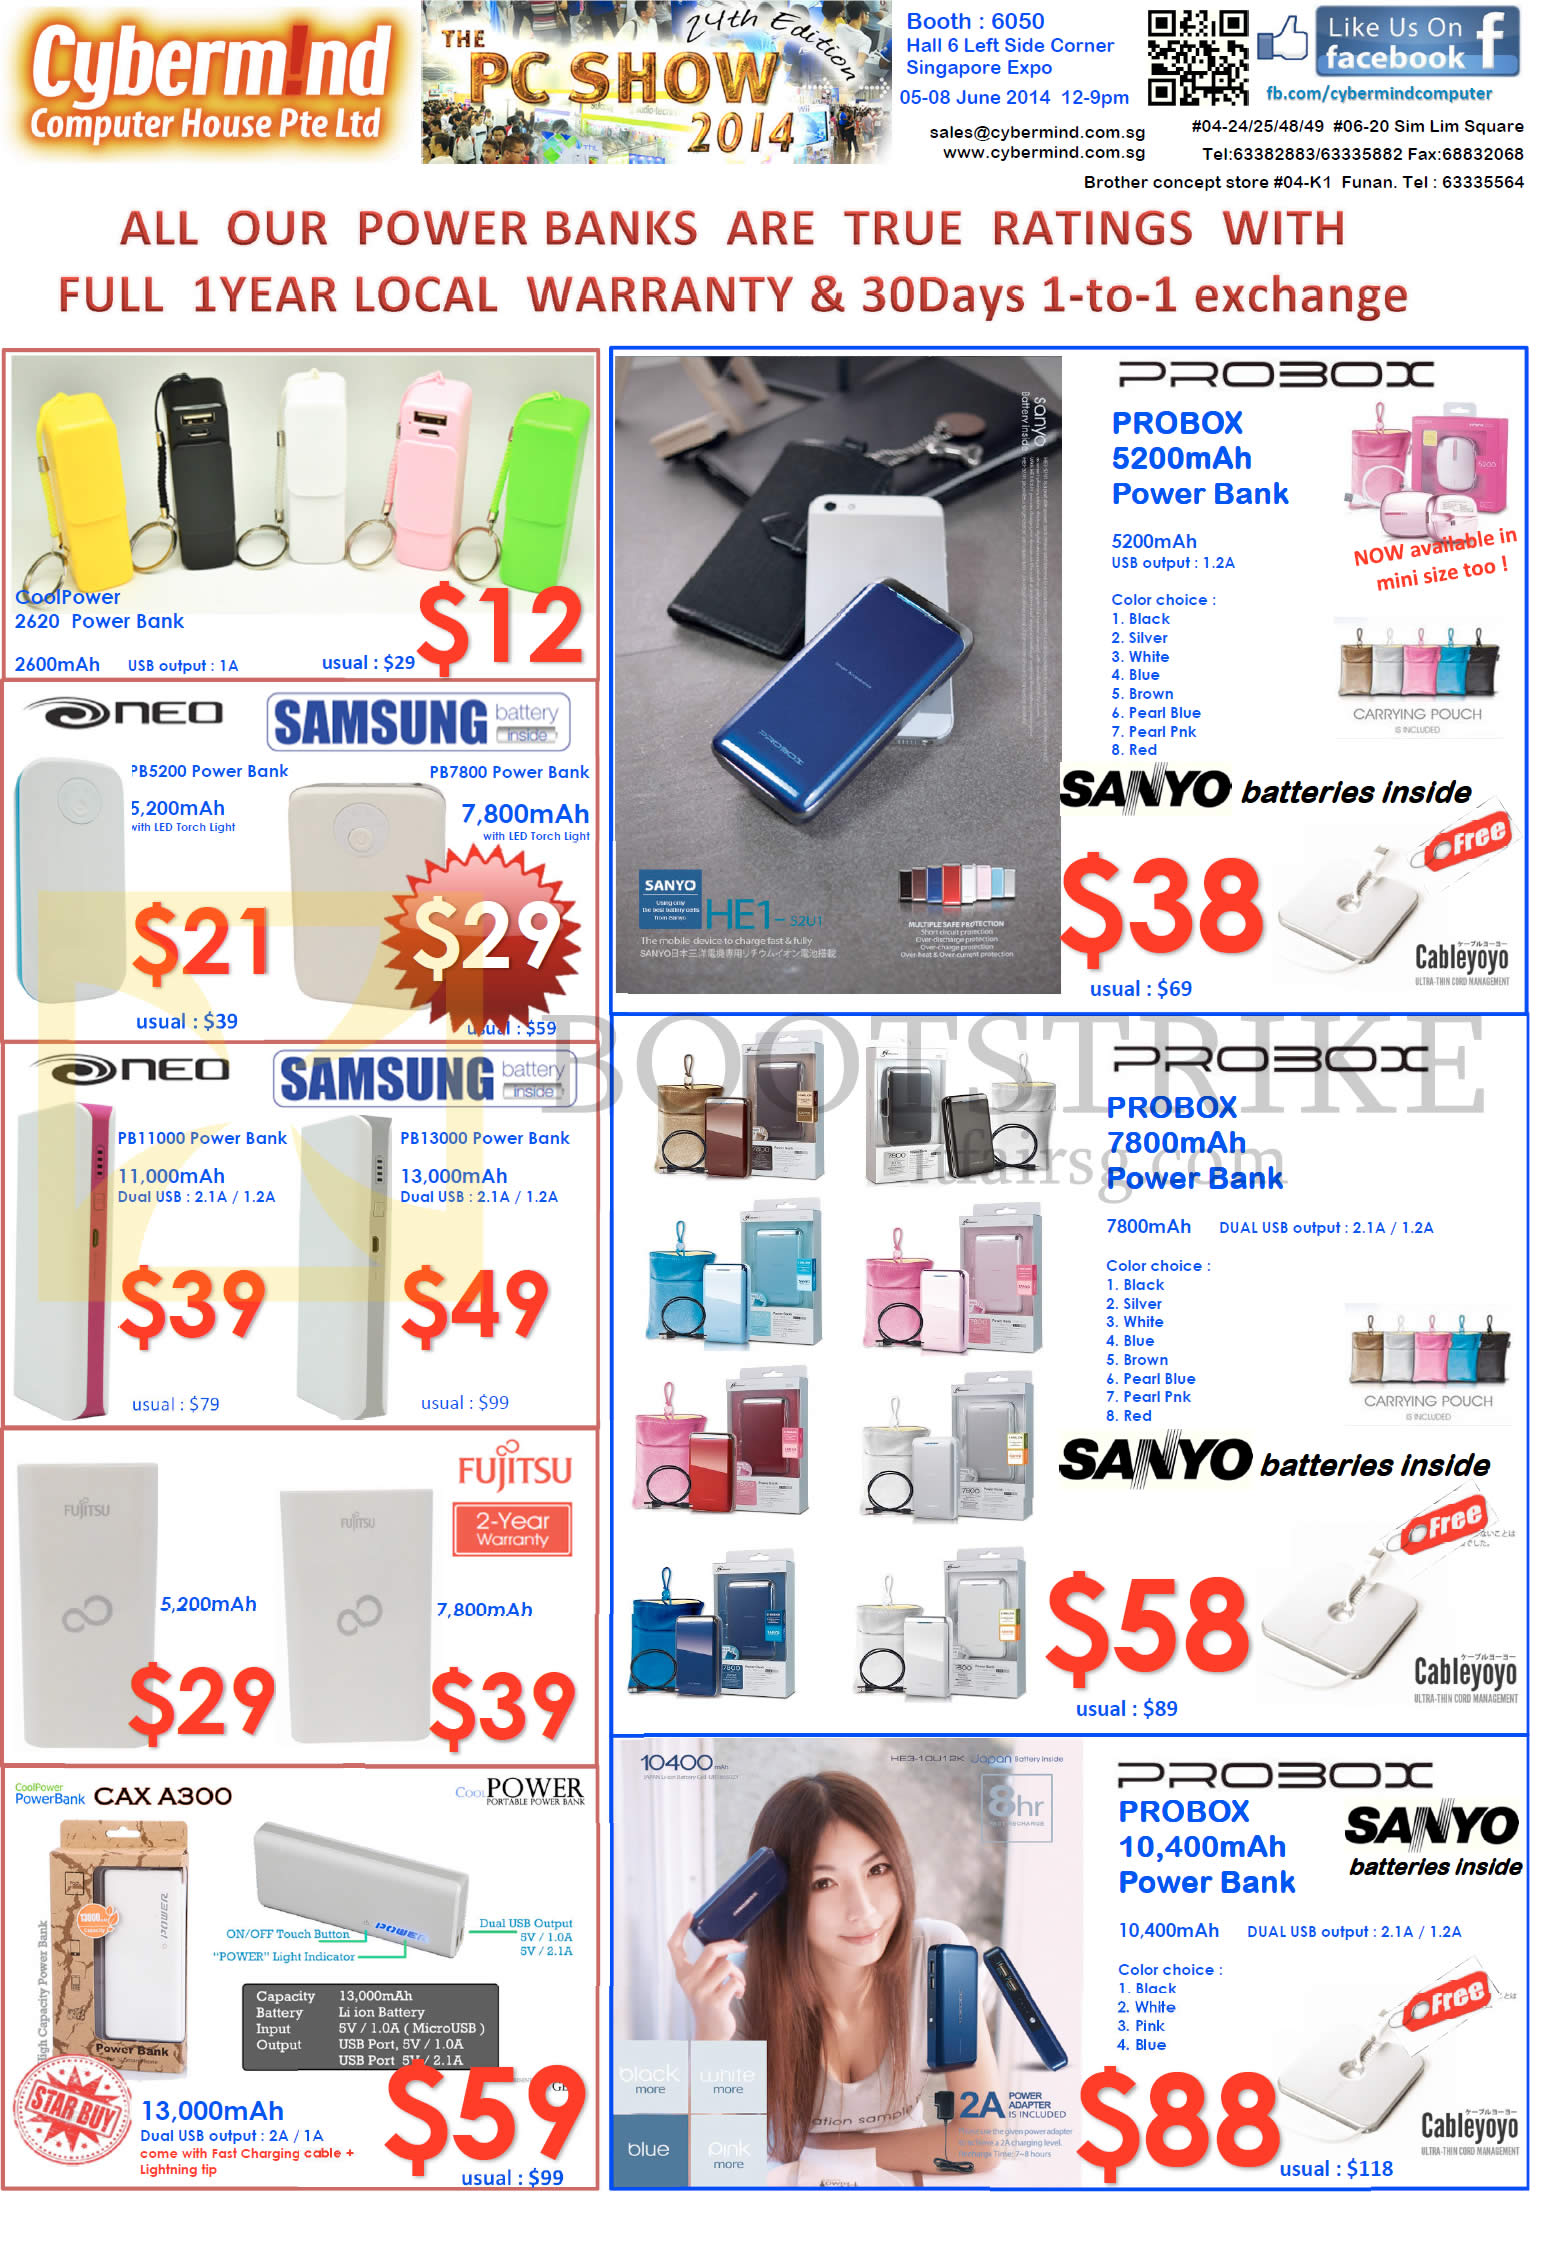 PC SHOW 2014 price list image brochure of Cybermind Power Banks Samsung, Fujitsu, Probox, Sanyo